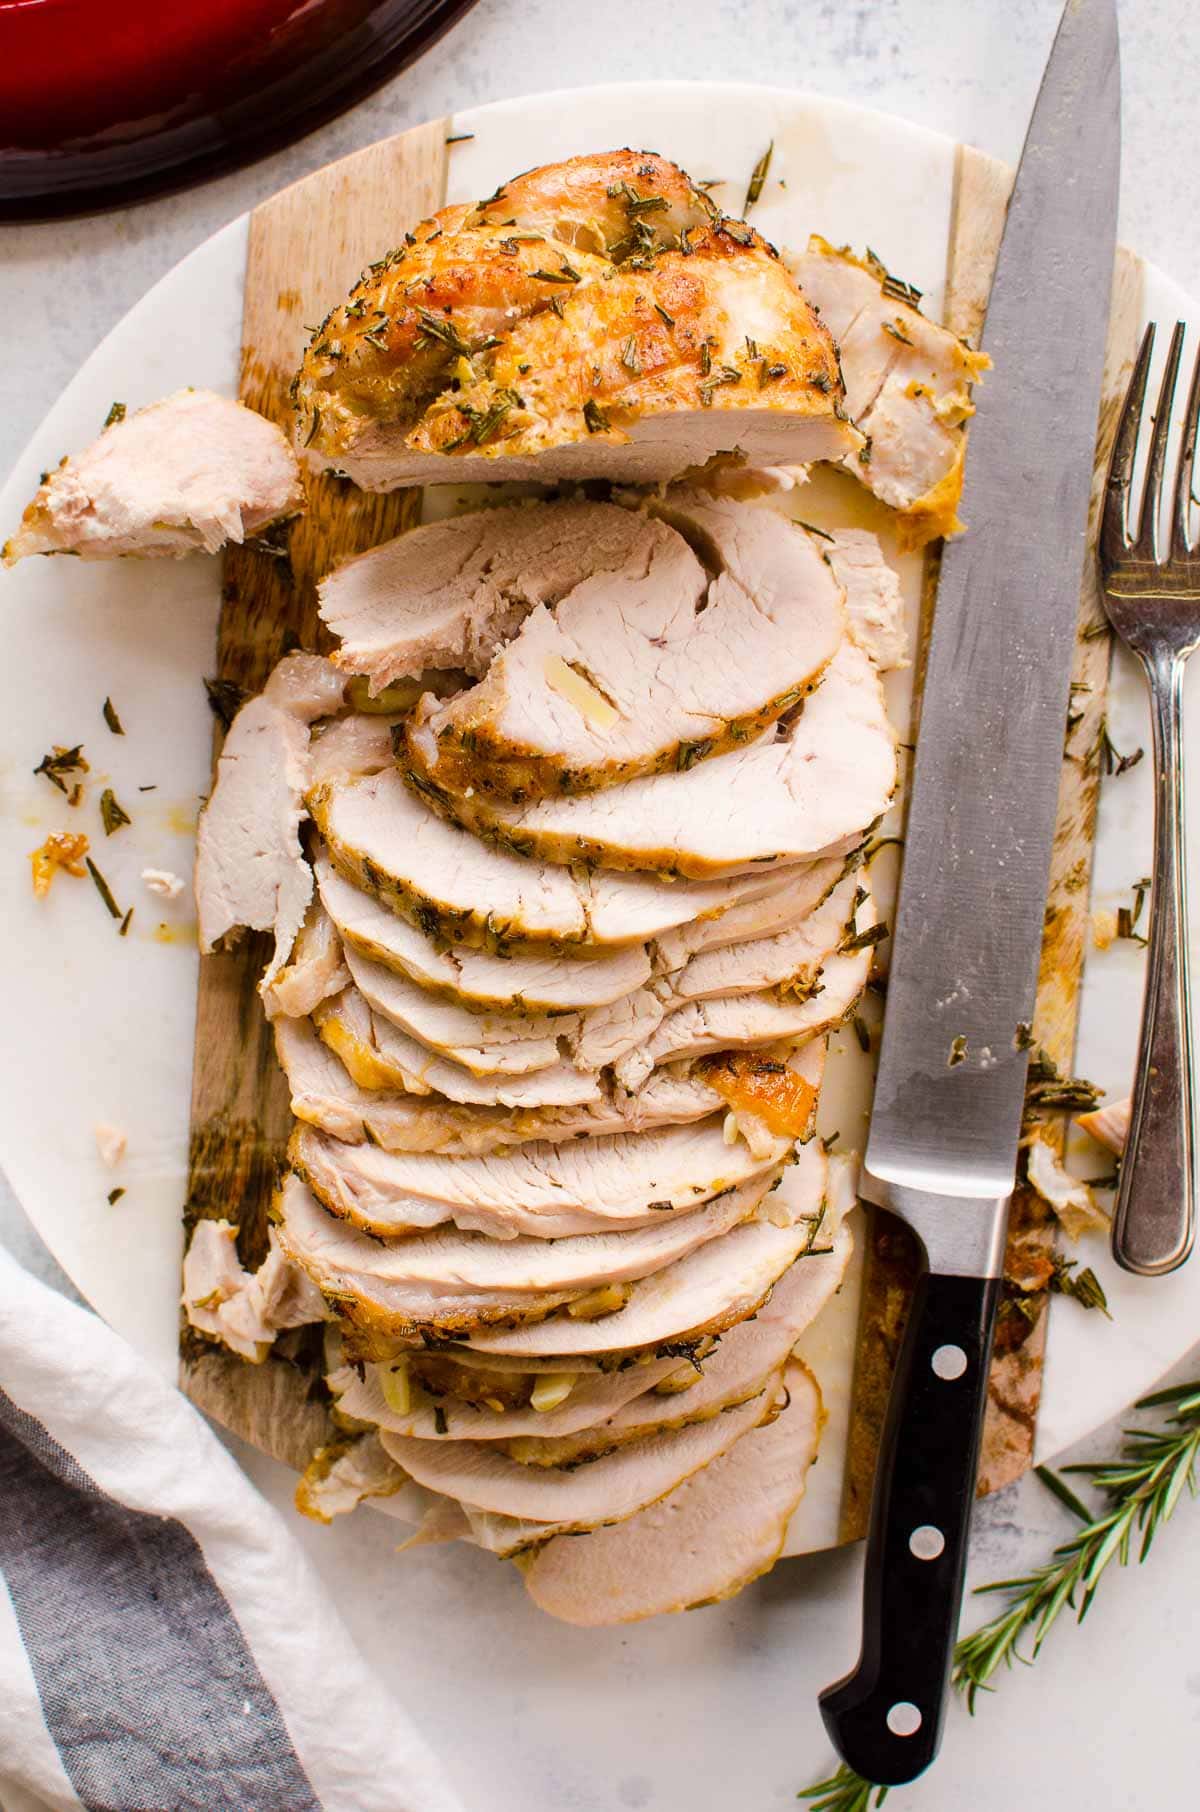 Boneless turkey breast roast sliced on a platter with knife and garnish.